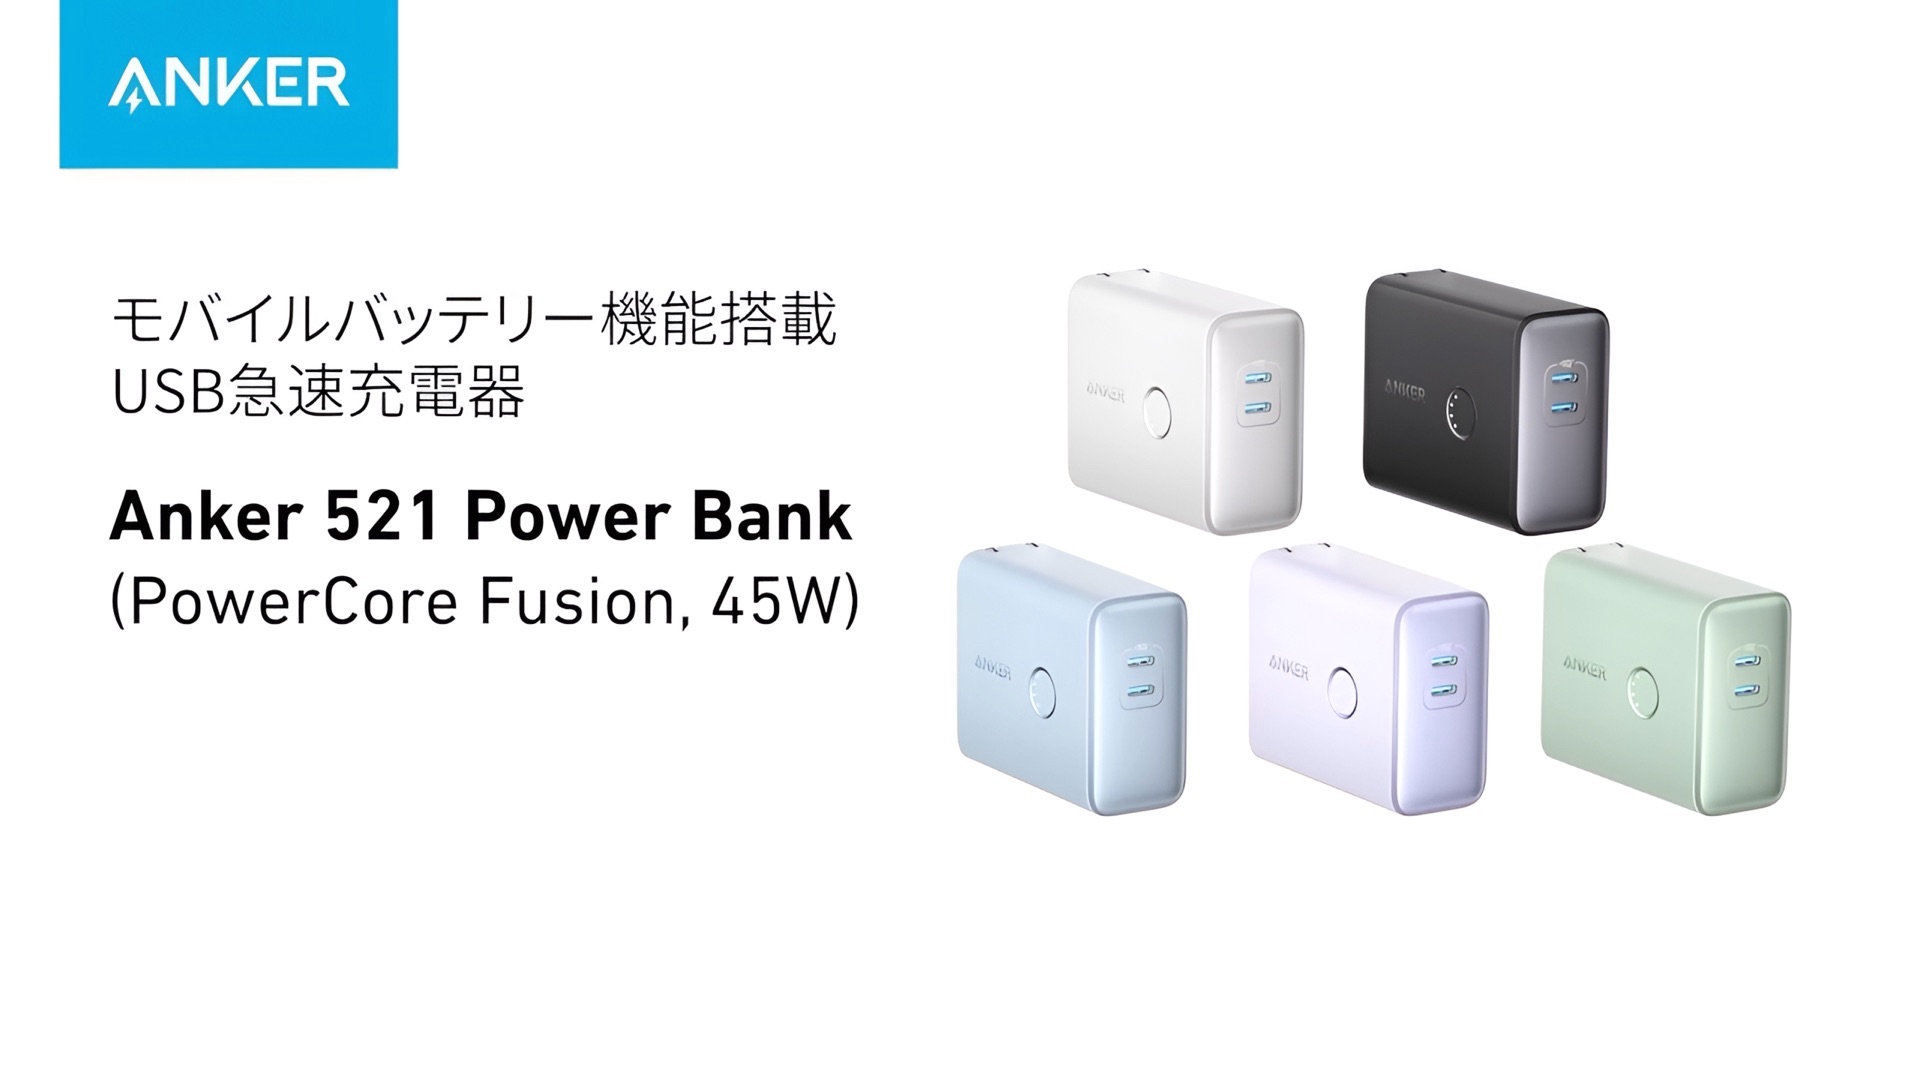 Anker Japan、最大45W出力のUSB急速充電器に加えモバイルバッテリー機能も備えたハイブリッド設計のUSB急速充電器「Anker 521  Power Bank (PowerCore Fusion, 45W)」を発売。